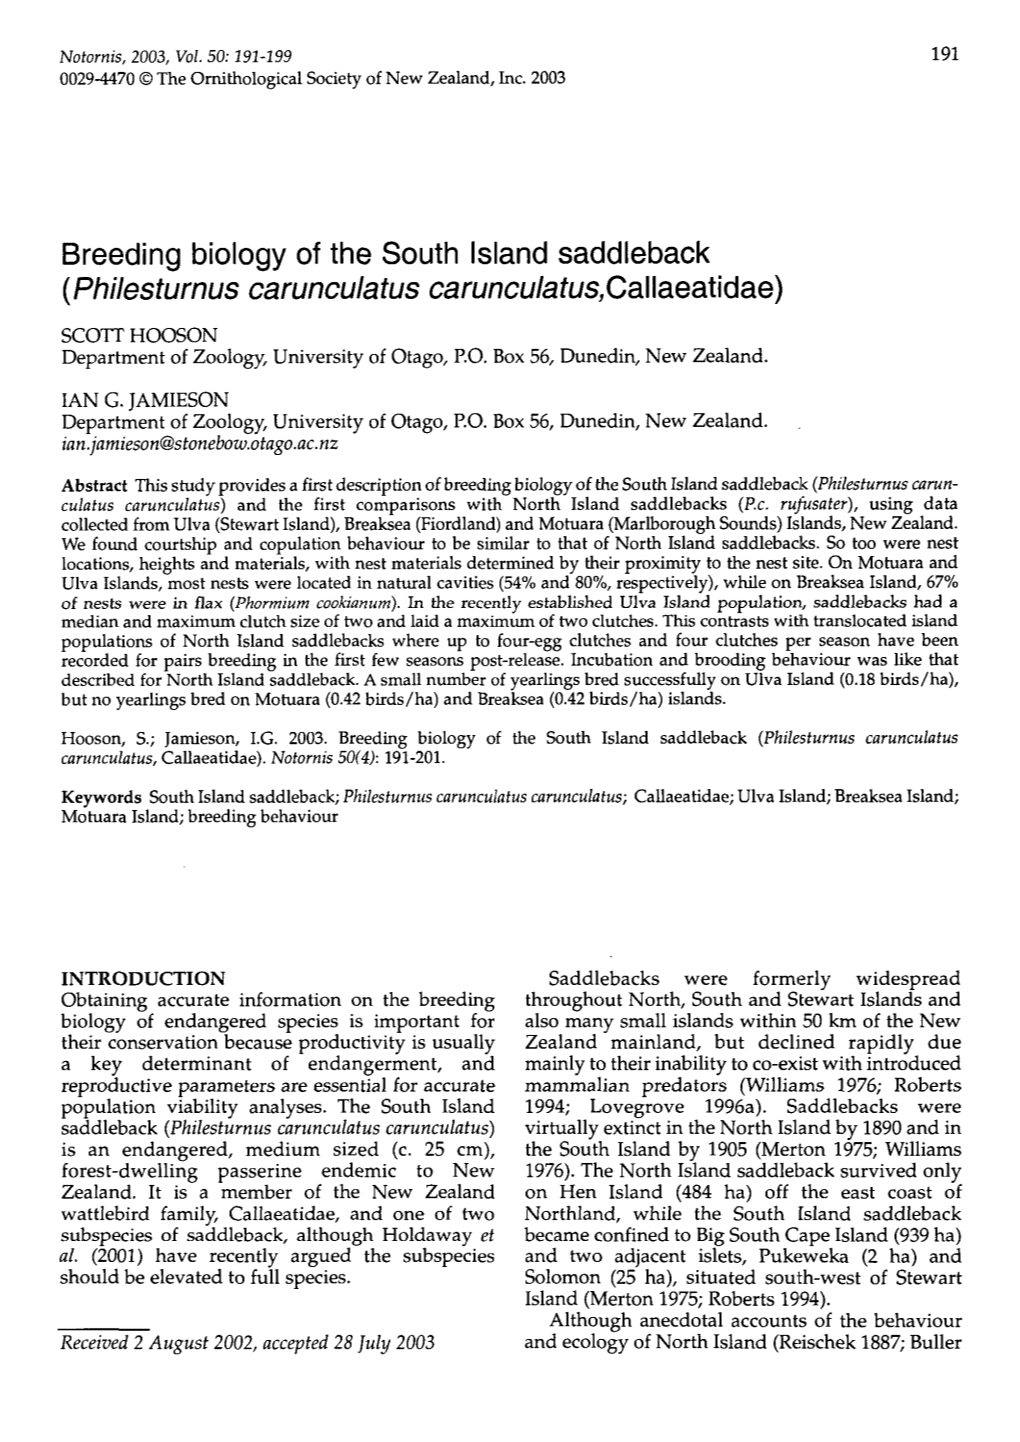 Breeding Biology of the South Island Saddleback (Philesturnus Carunculatus Carunculatus,Callaeatidae)